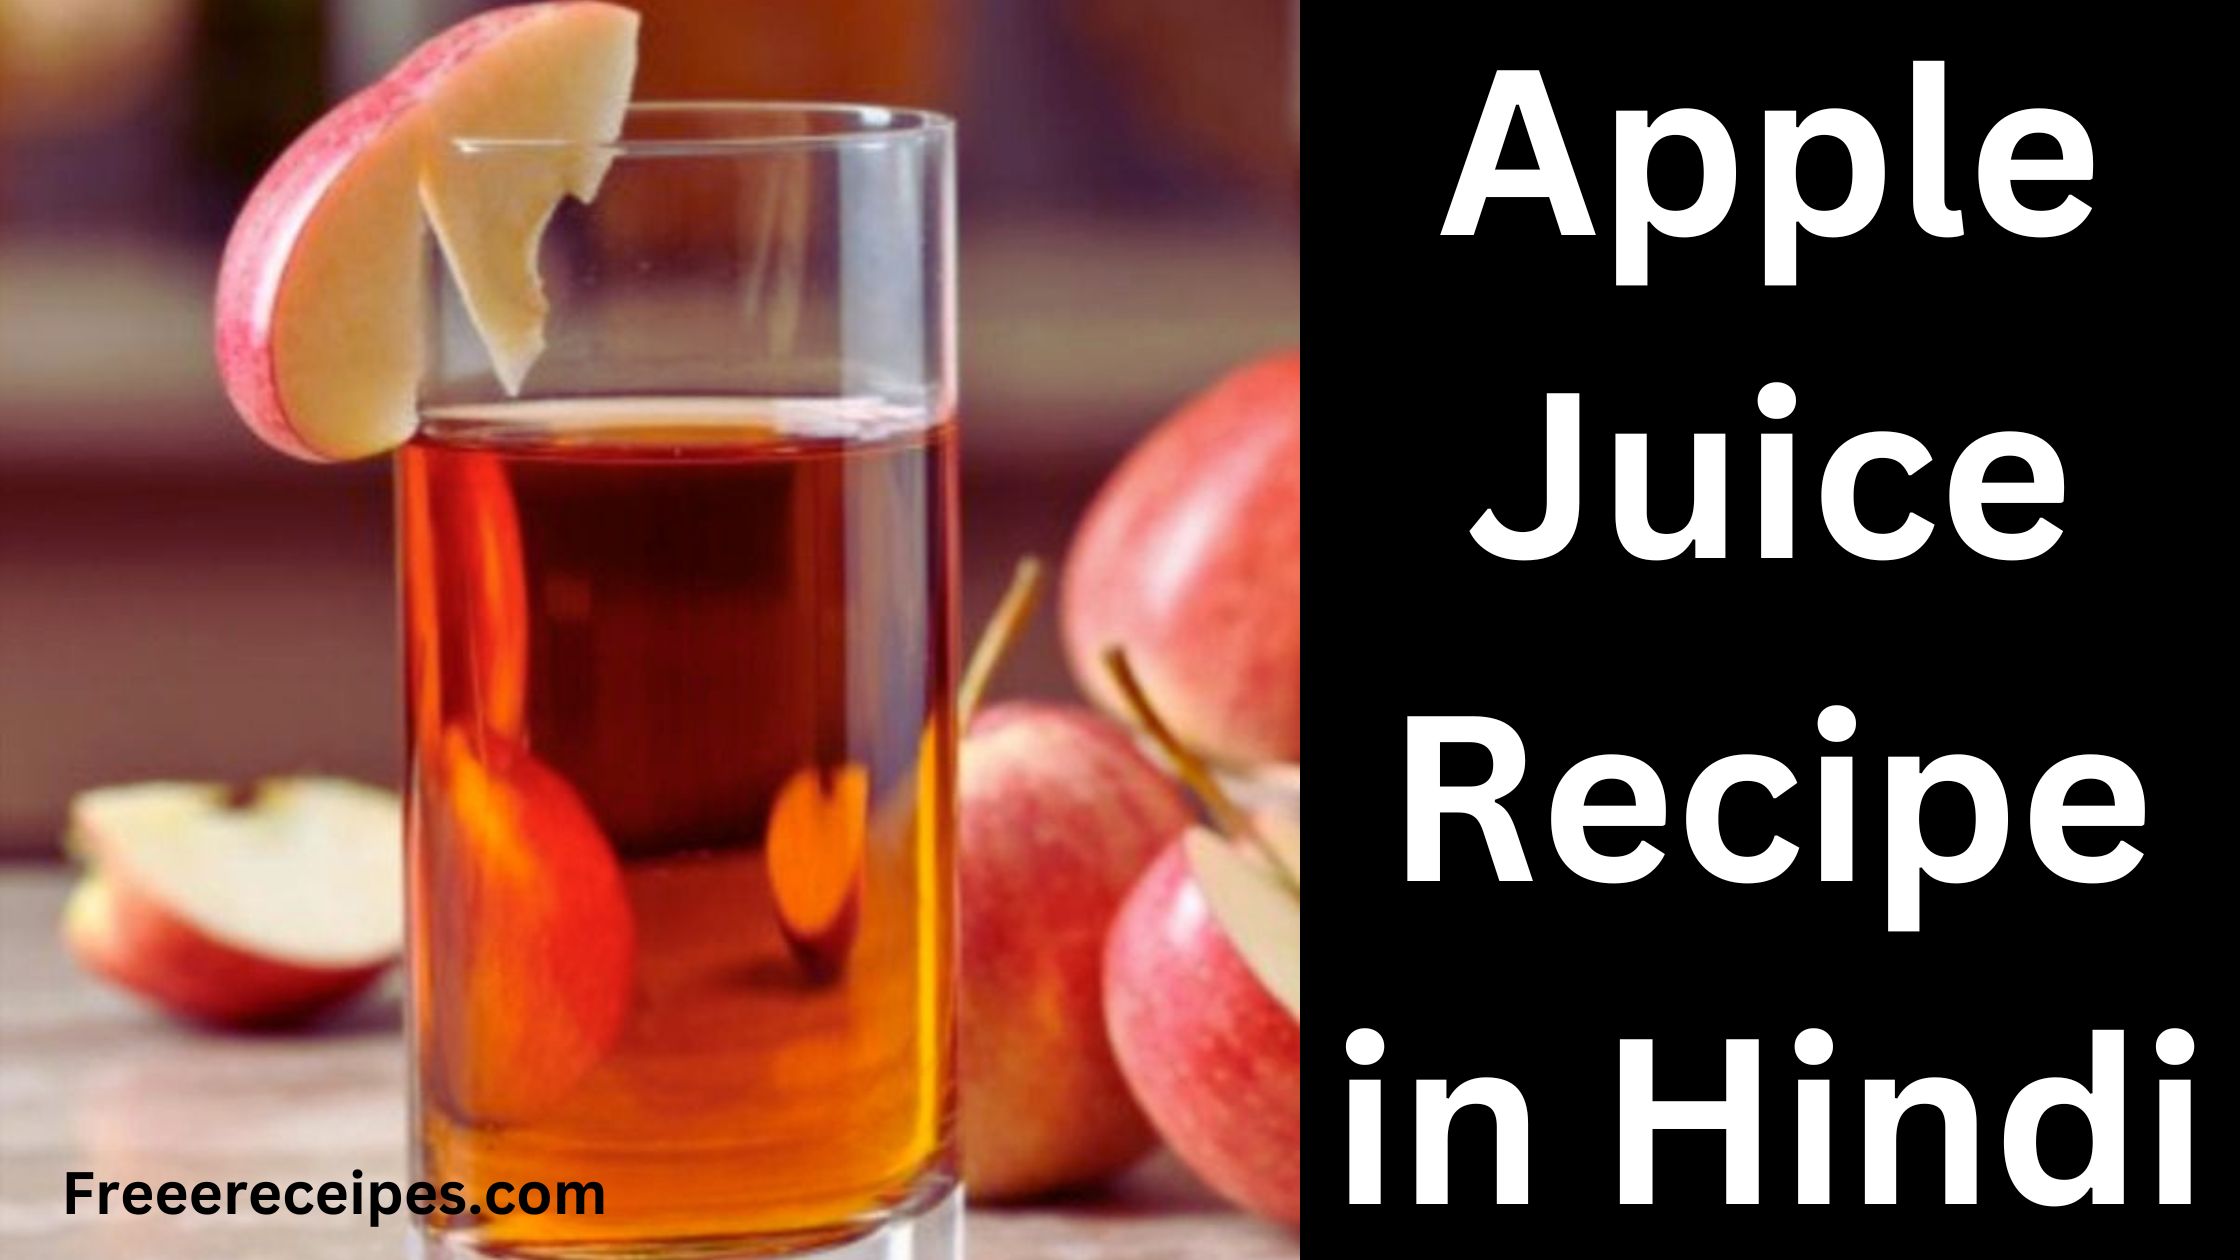 Apple Juice Recipe in Hindi